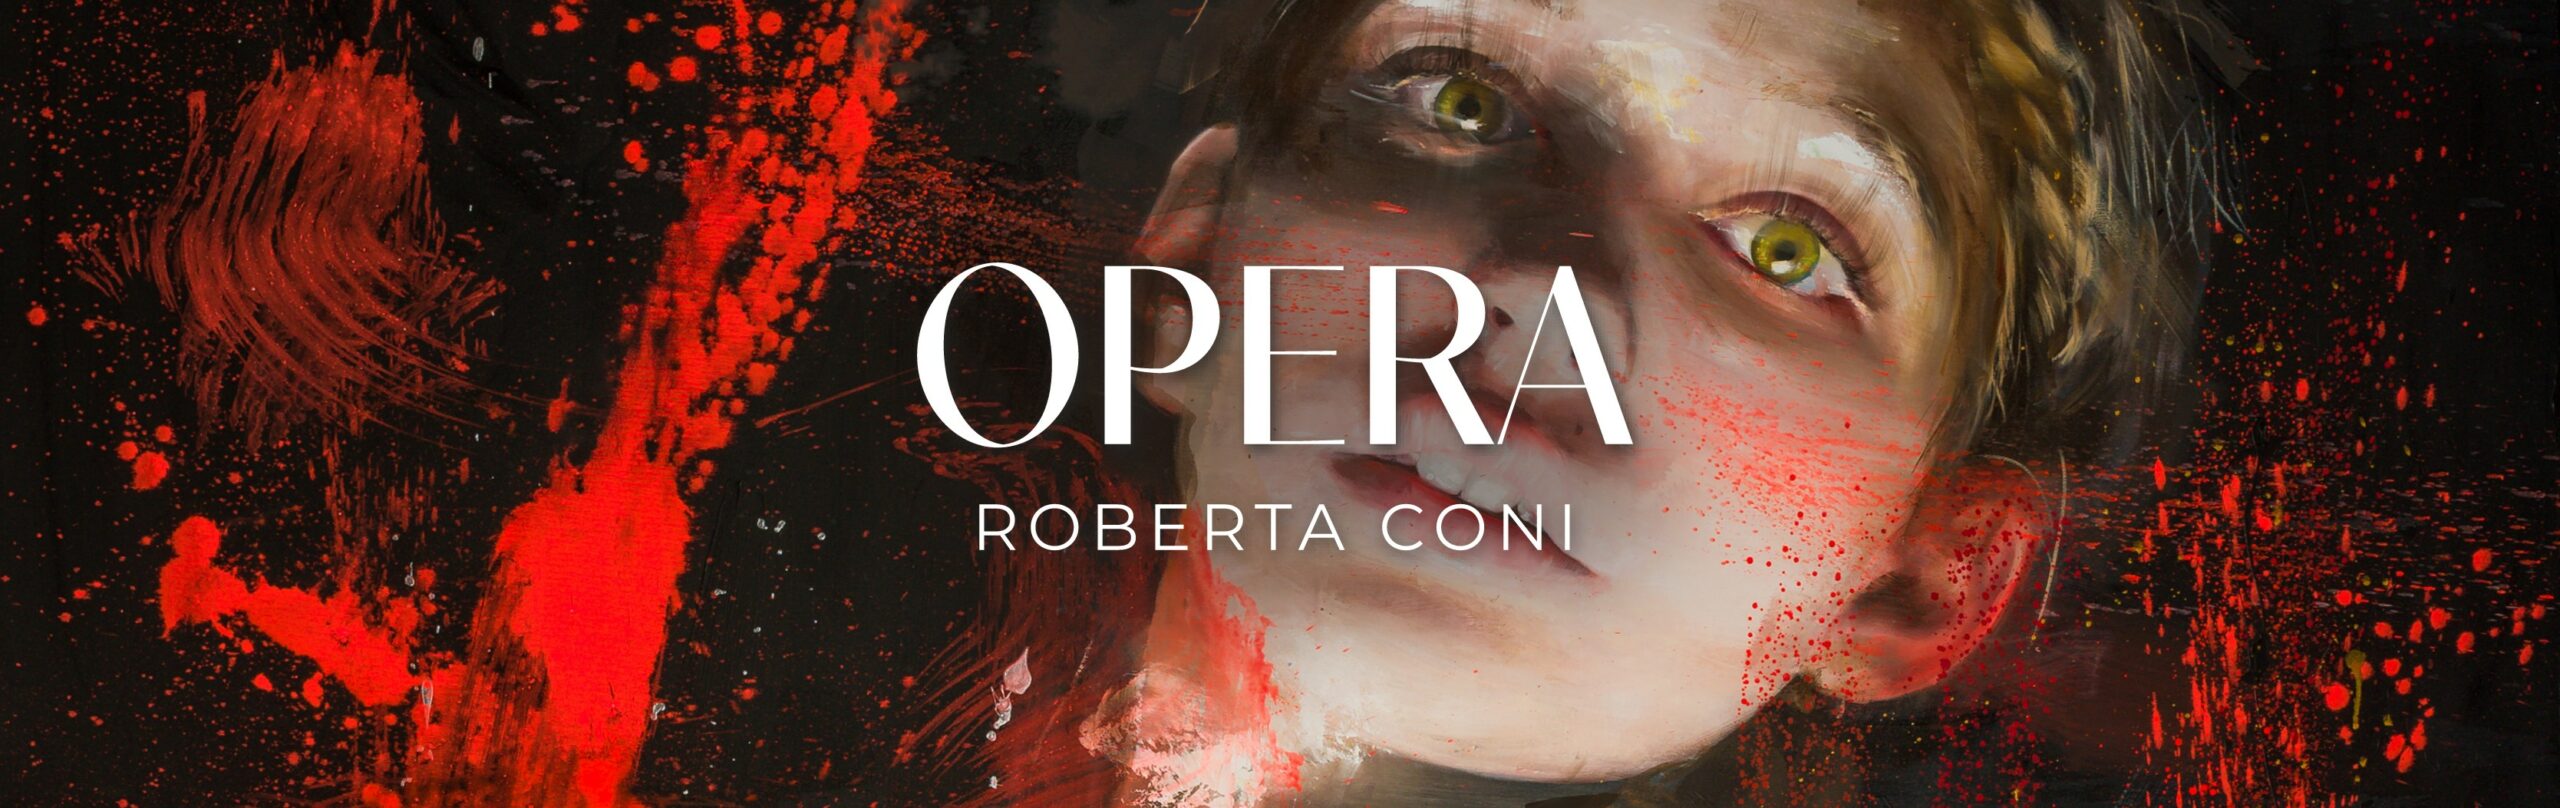 OPERA – ROBERTA CONI SOLO SHOW LONDRES - Galeries Bartoux